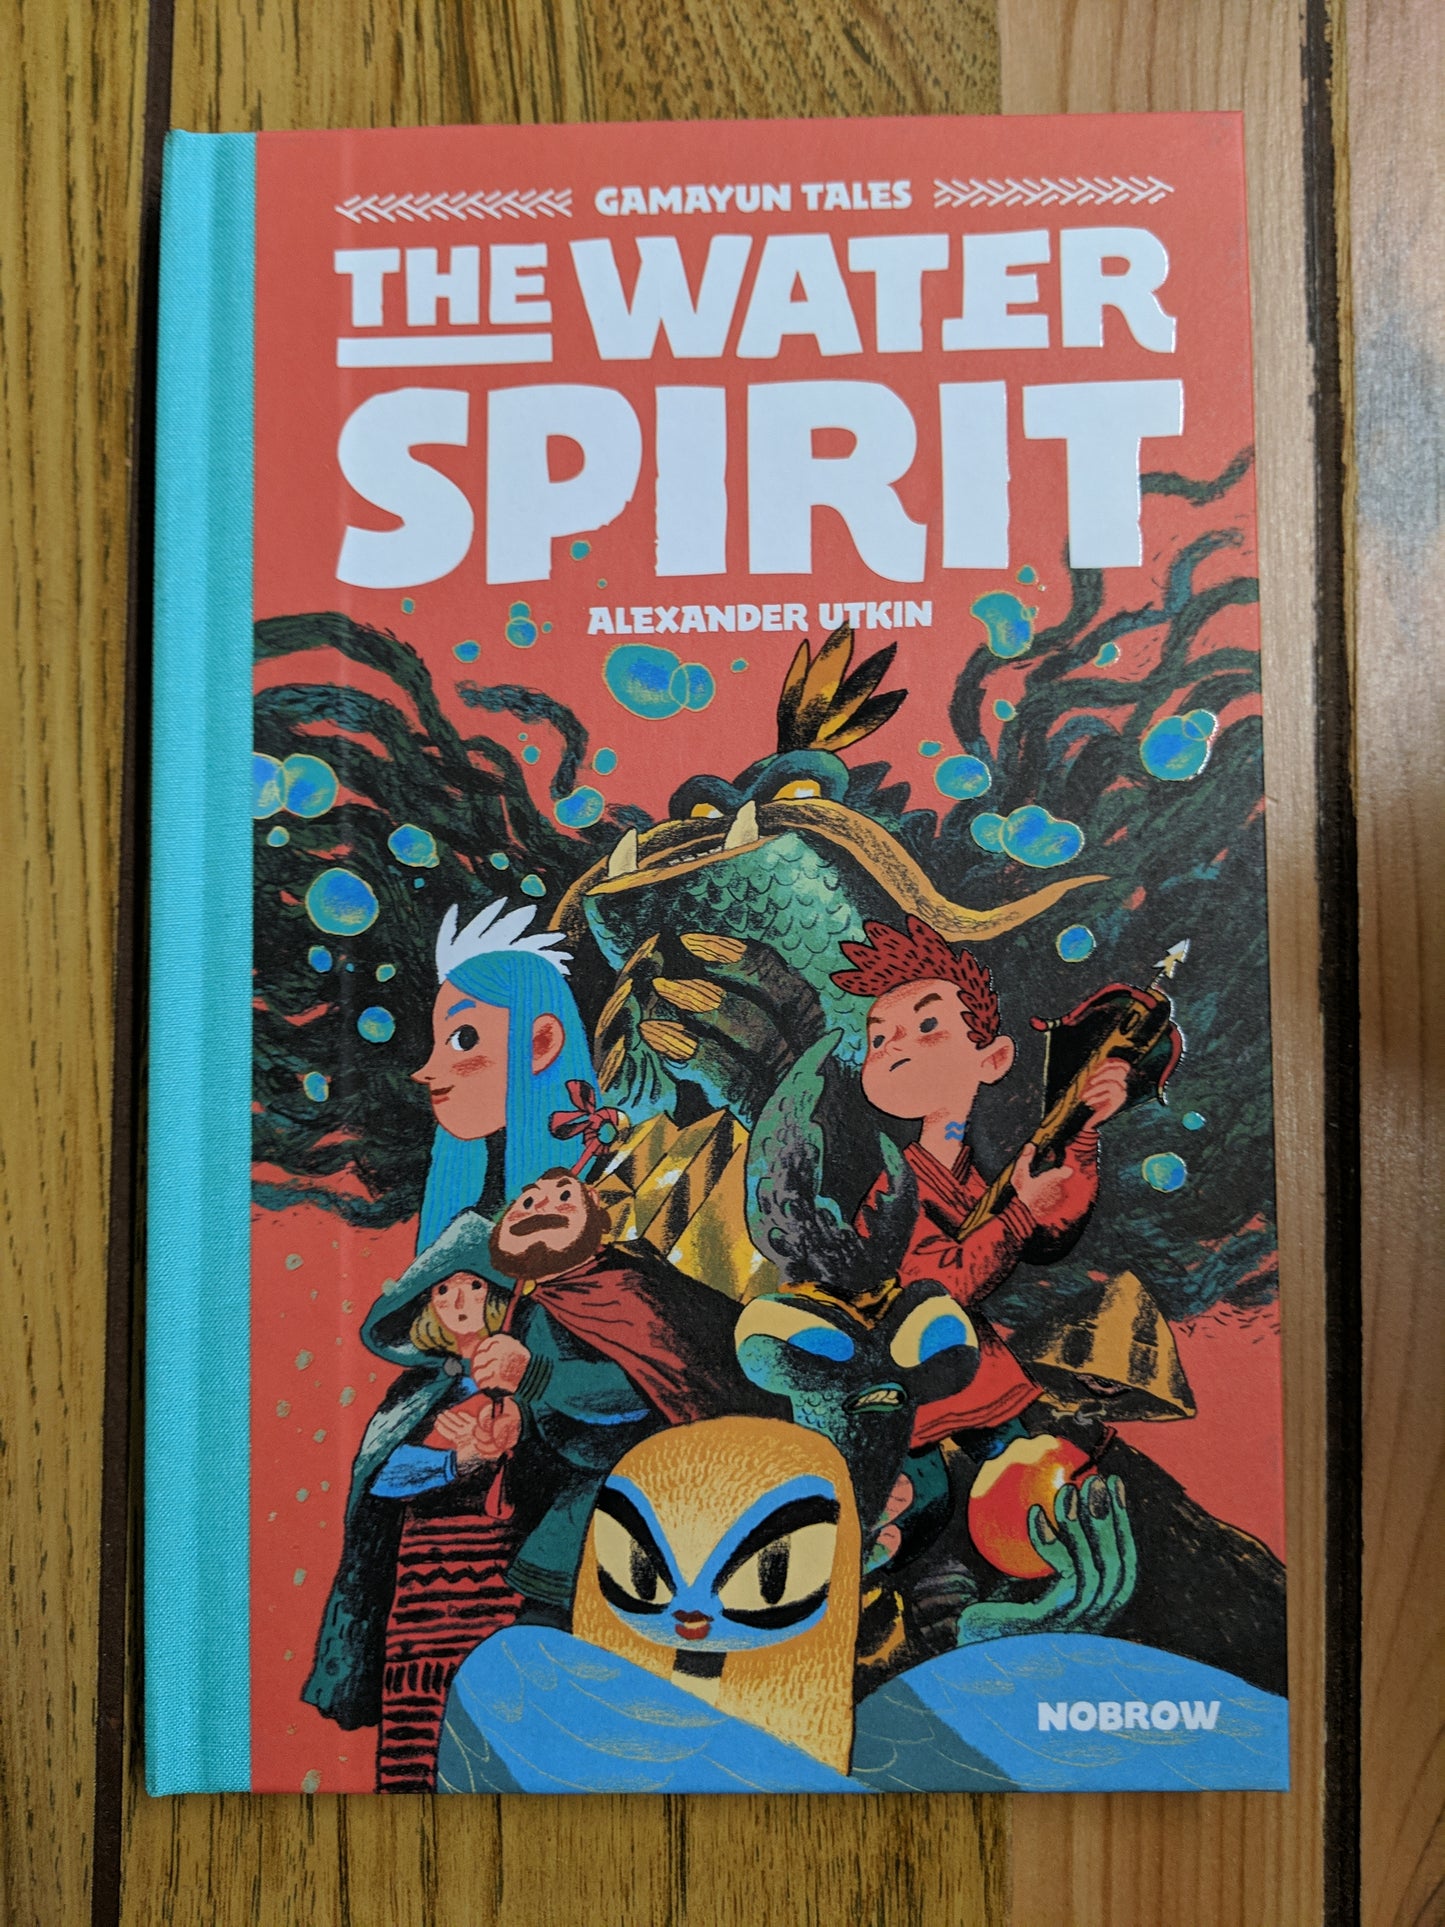 The Water Spirit: Gamayun Tales Vol 2